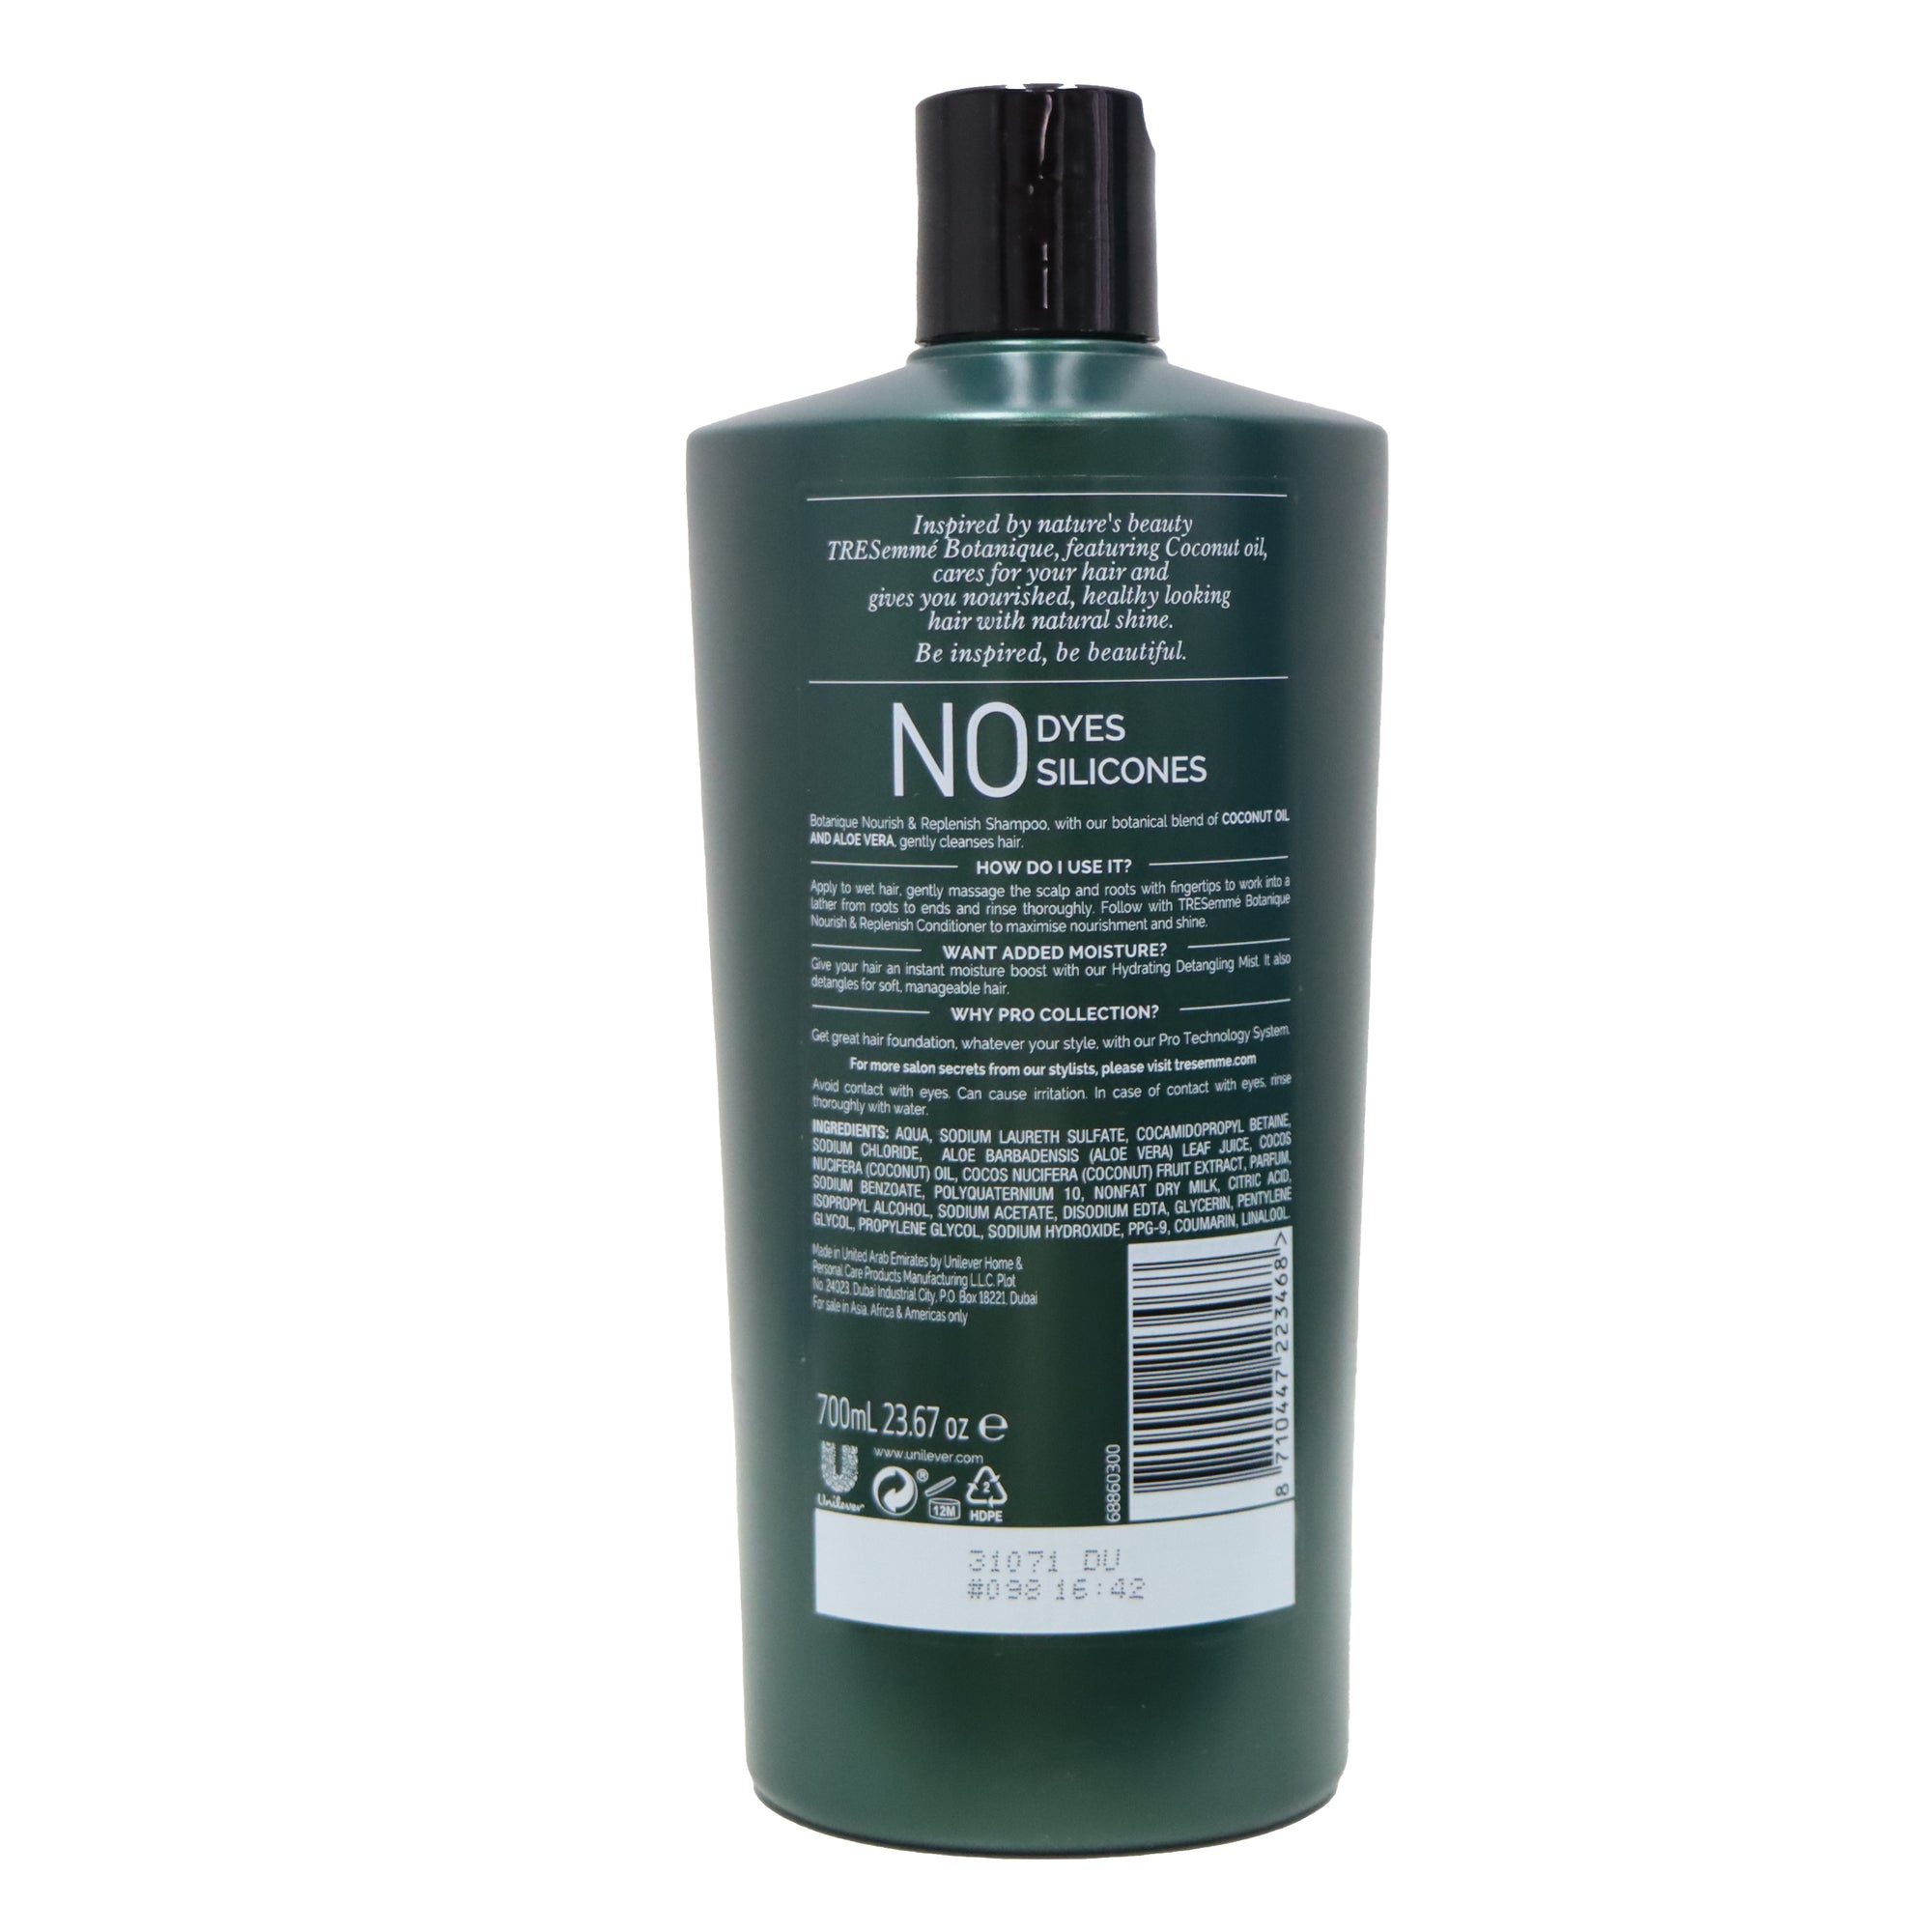 TRESemmé Botanique Nourish & Replenish Shampoo with Coconut Oil & Aloe Vera 700ml